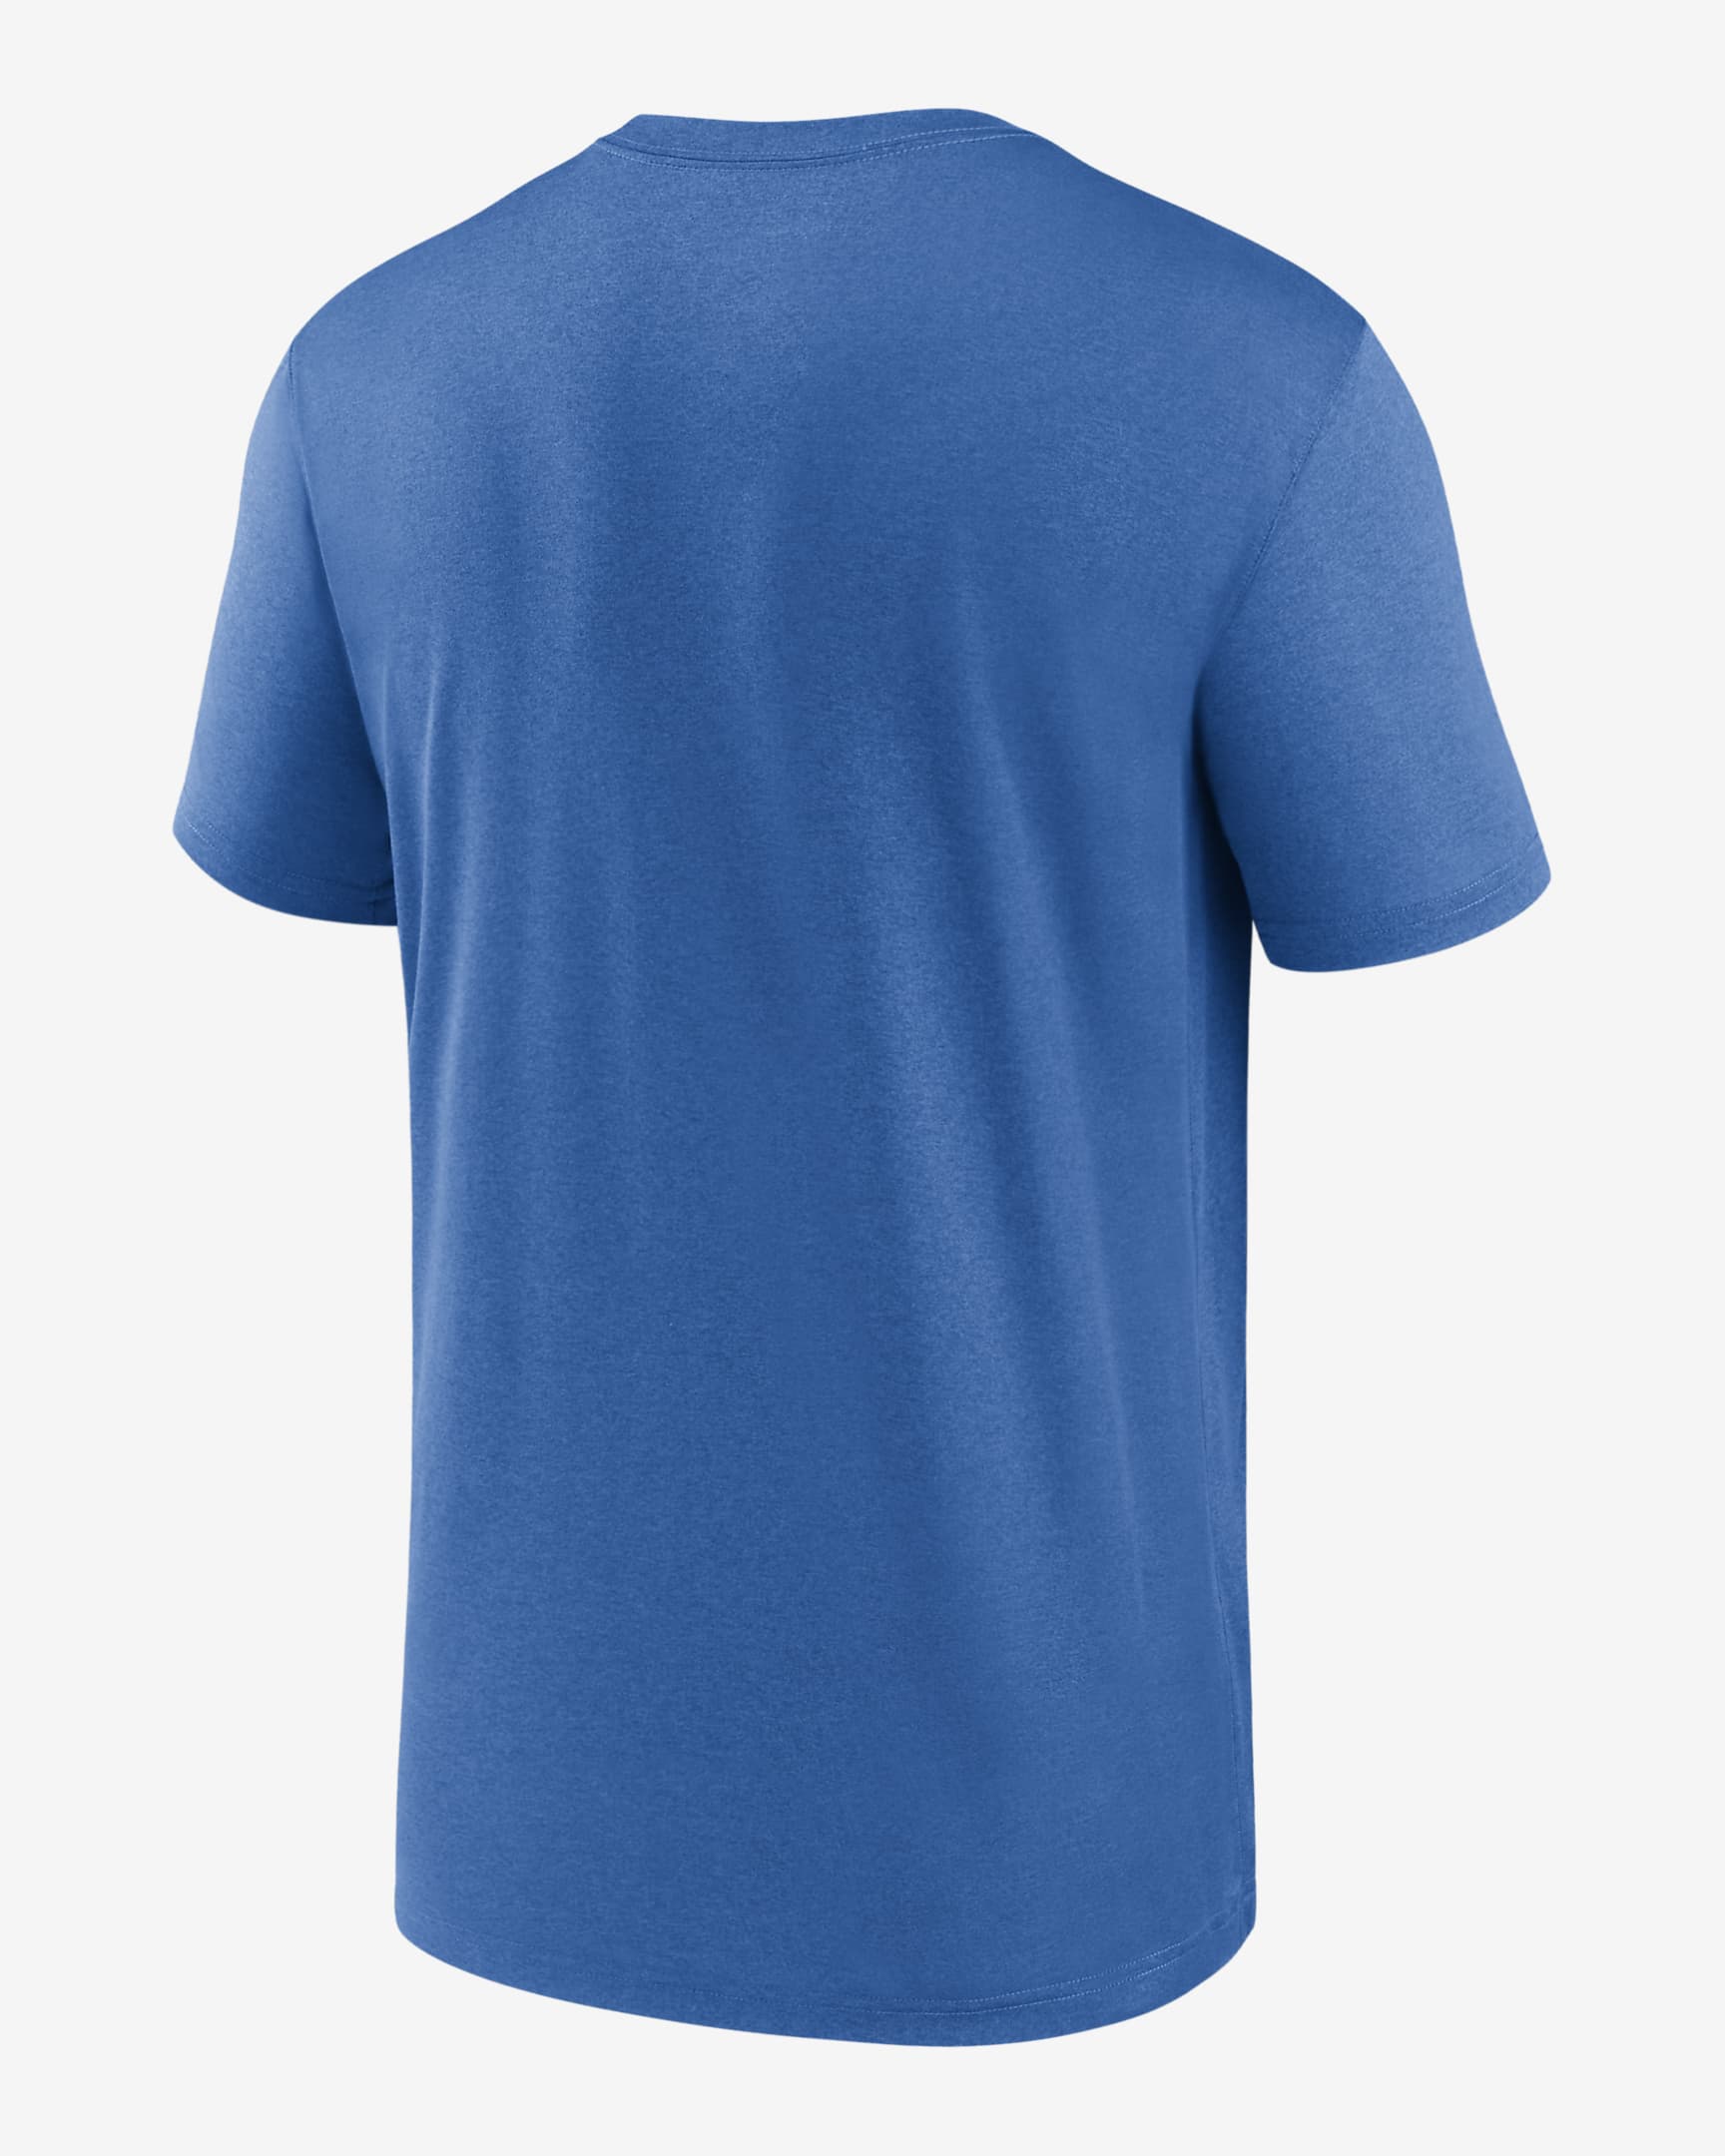 Nike Dri-FIT Wordmark Legend (NFL Detroit Lions) Men's T-Shirt. Nike.com